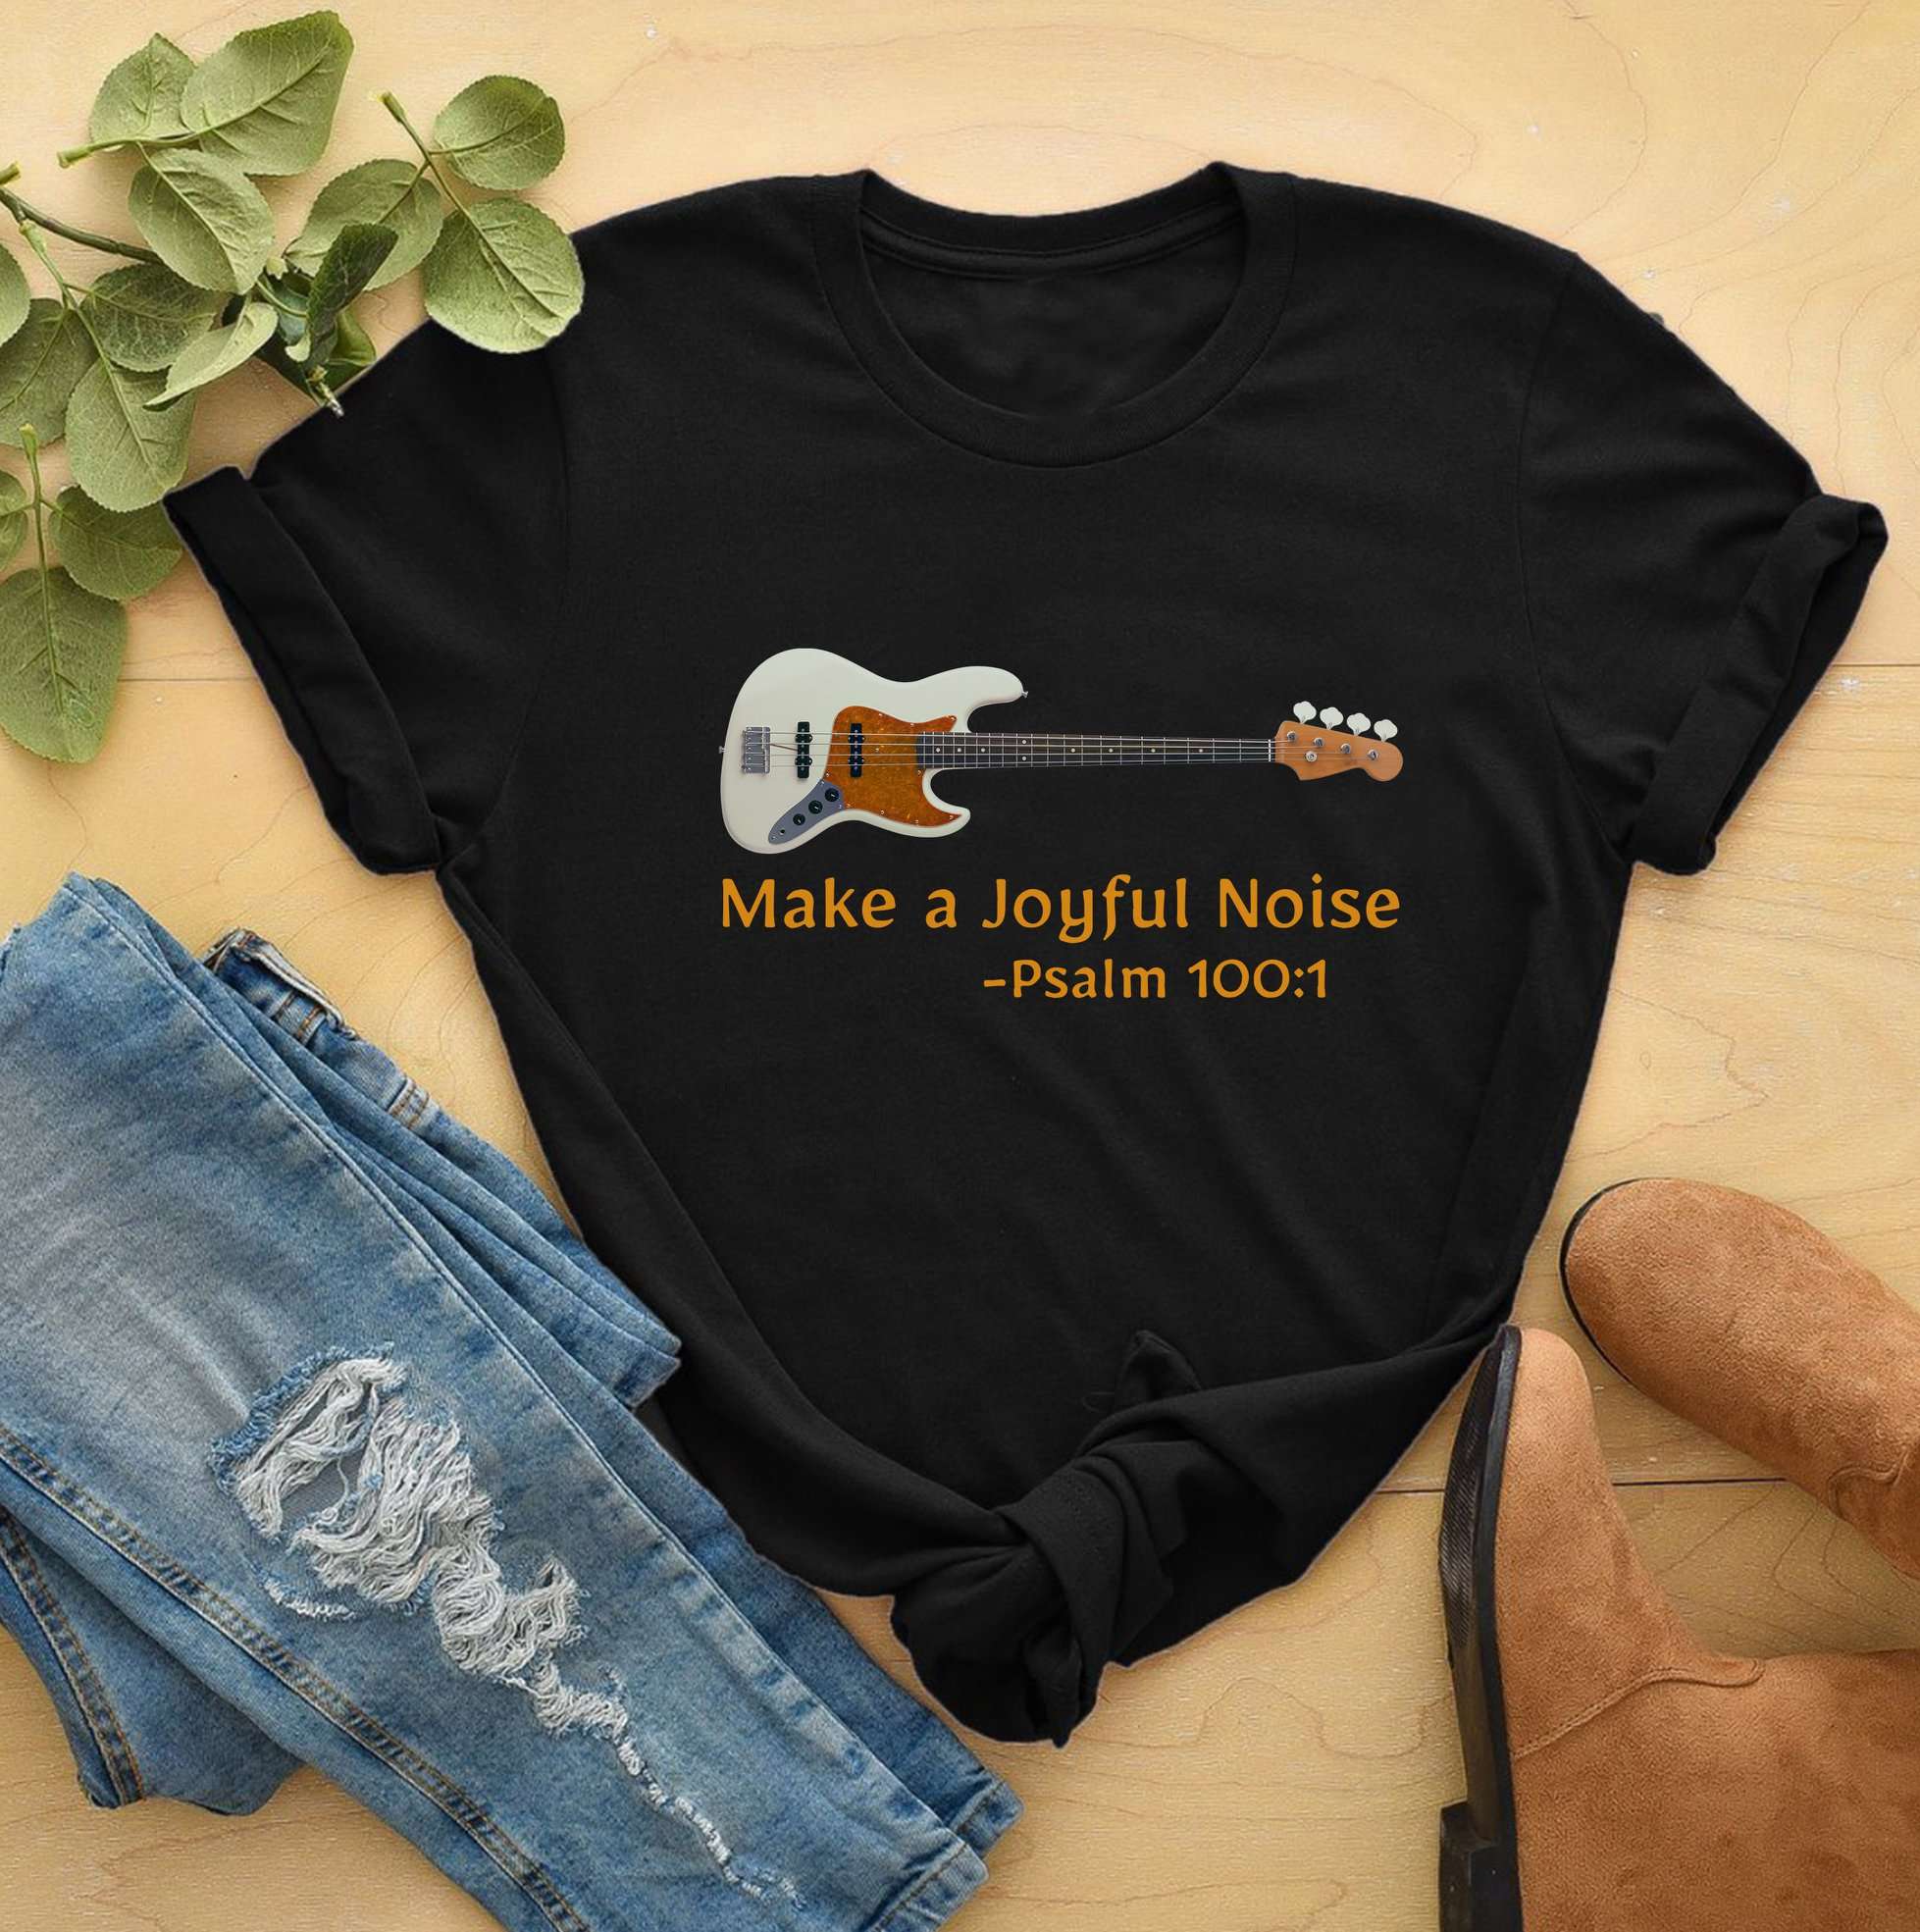 Make a joyful noise - Joyful noise from guitar, gift for Guitarists